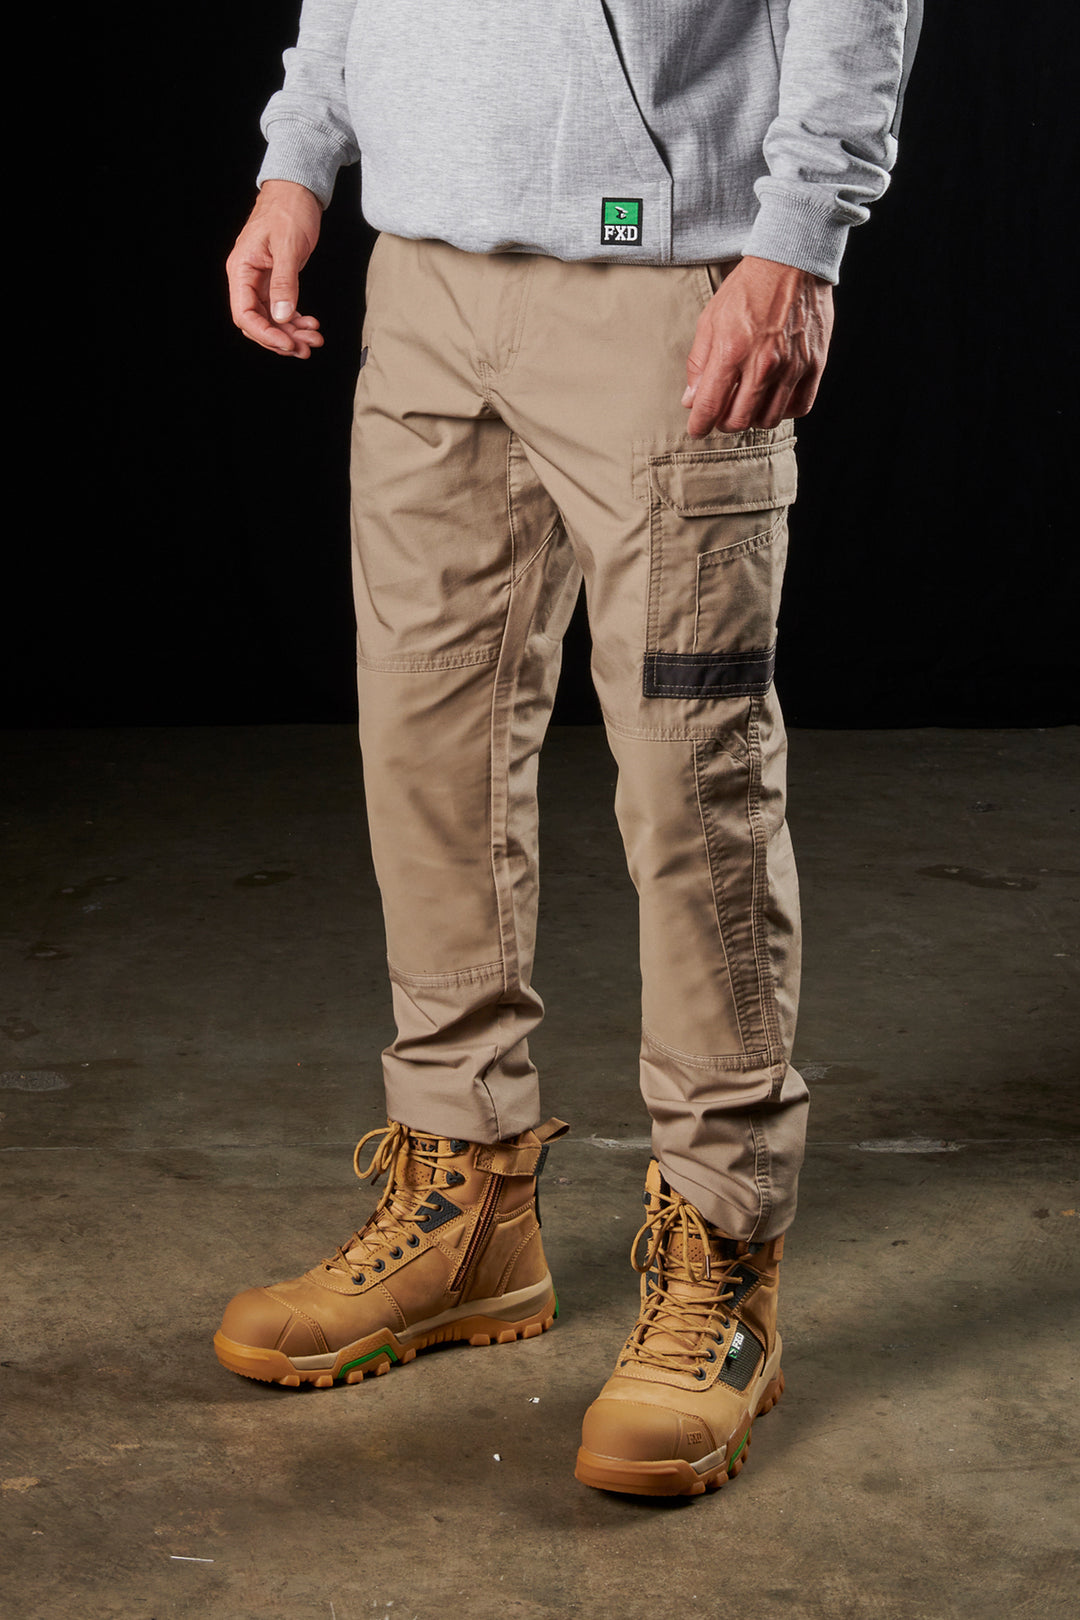 FXD Lightweight Pants WP-5